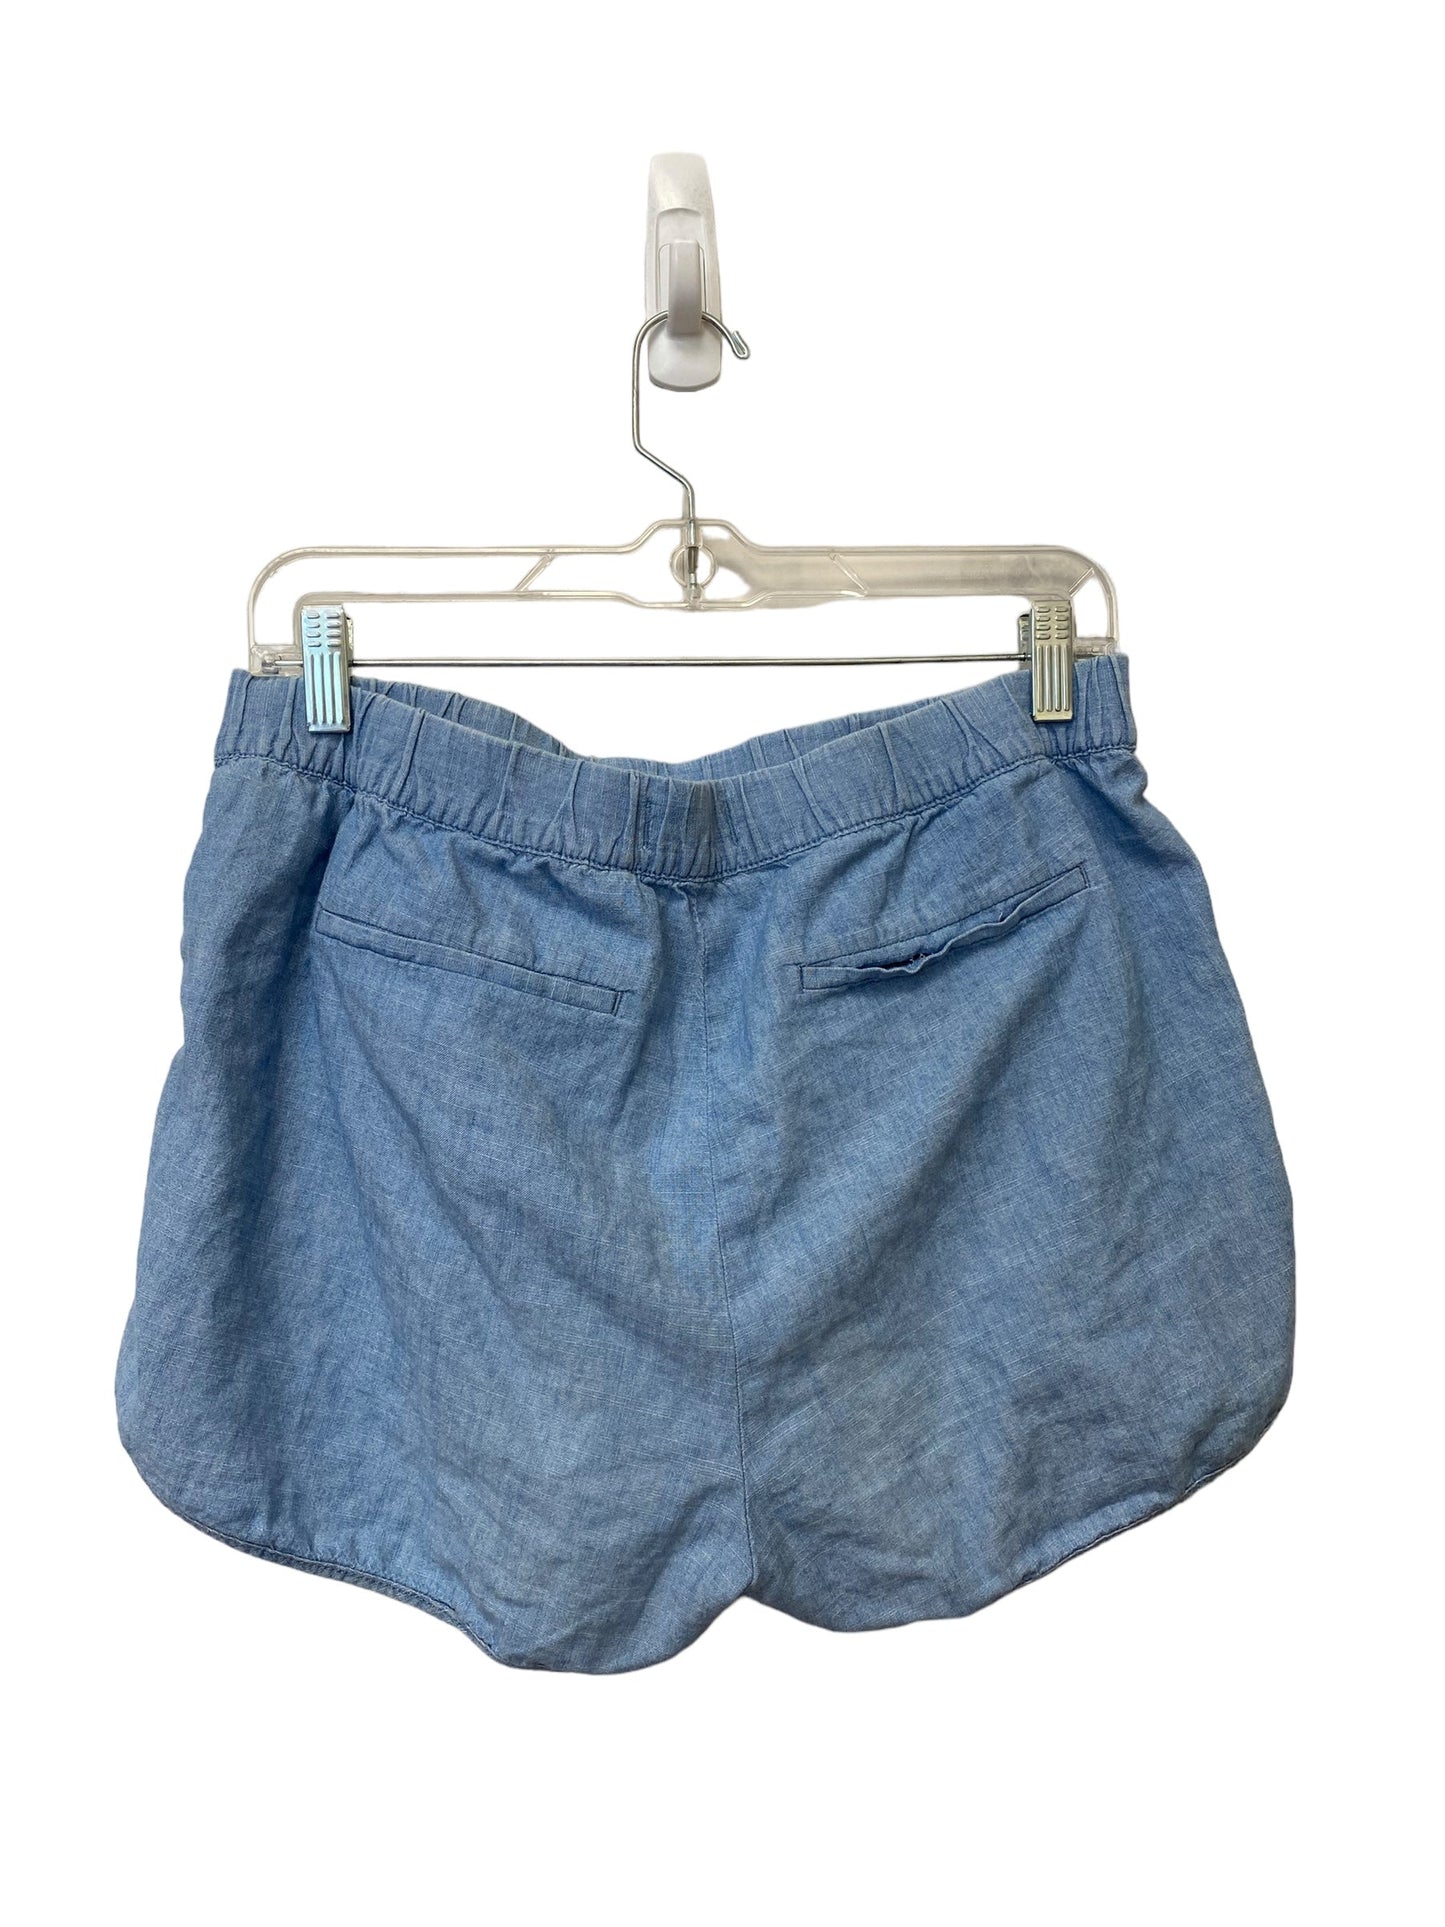 Blue Denim Shorts Madewell, Size M